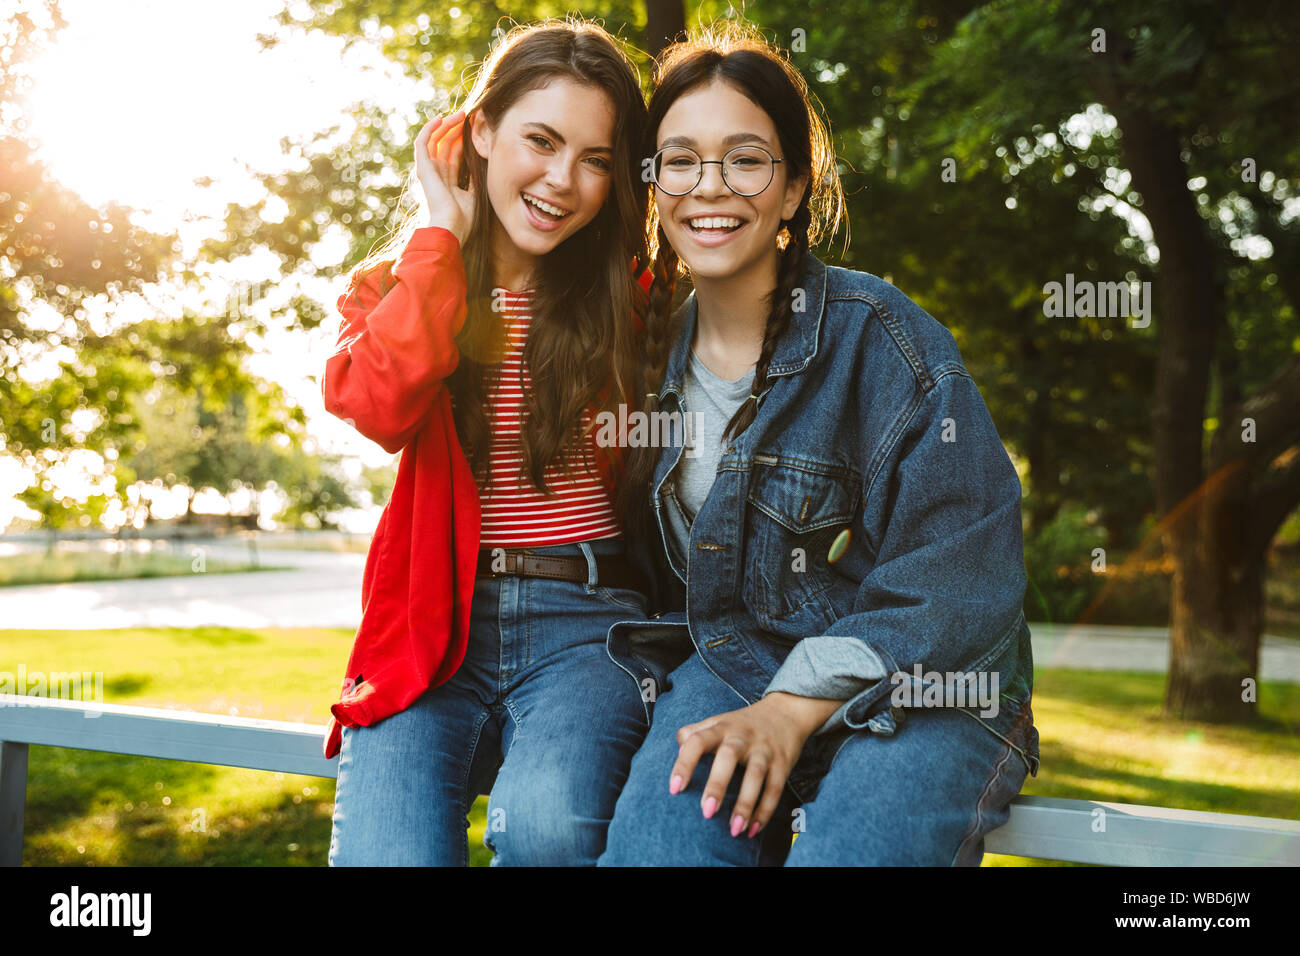 Image de deux élèves filles gaie et souriante hugging while sitting on railing in green park Banque D'Images